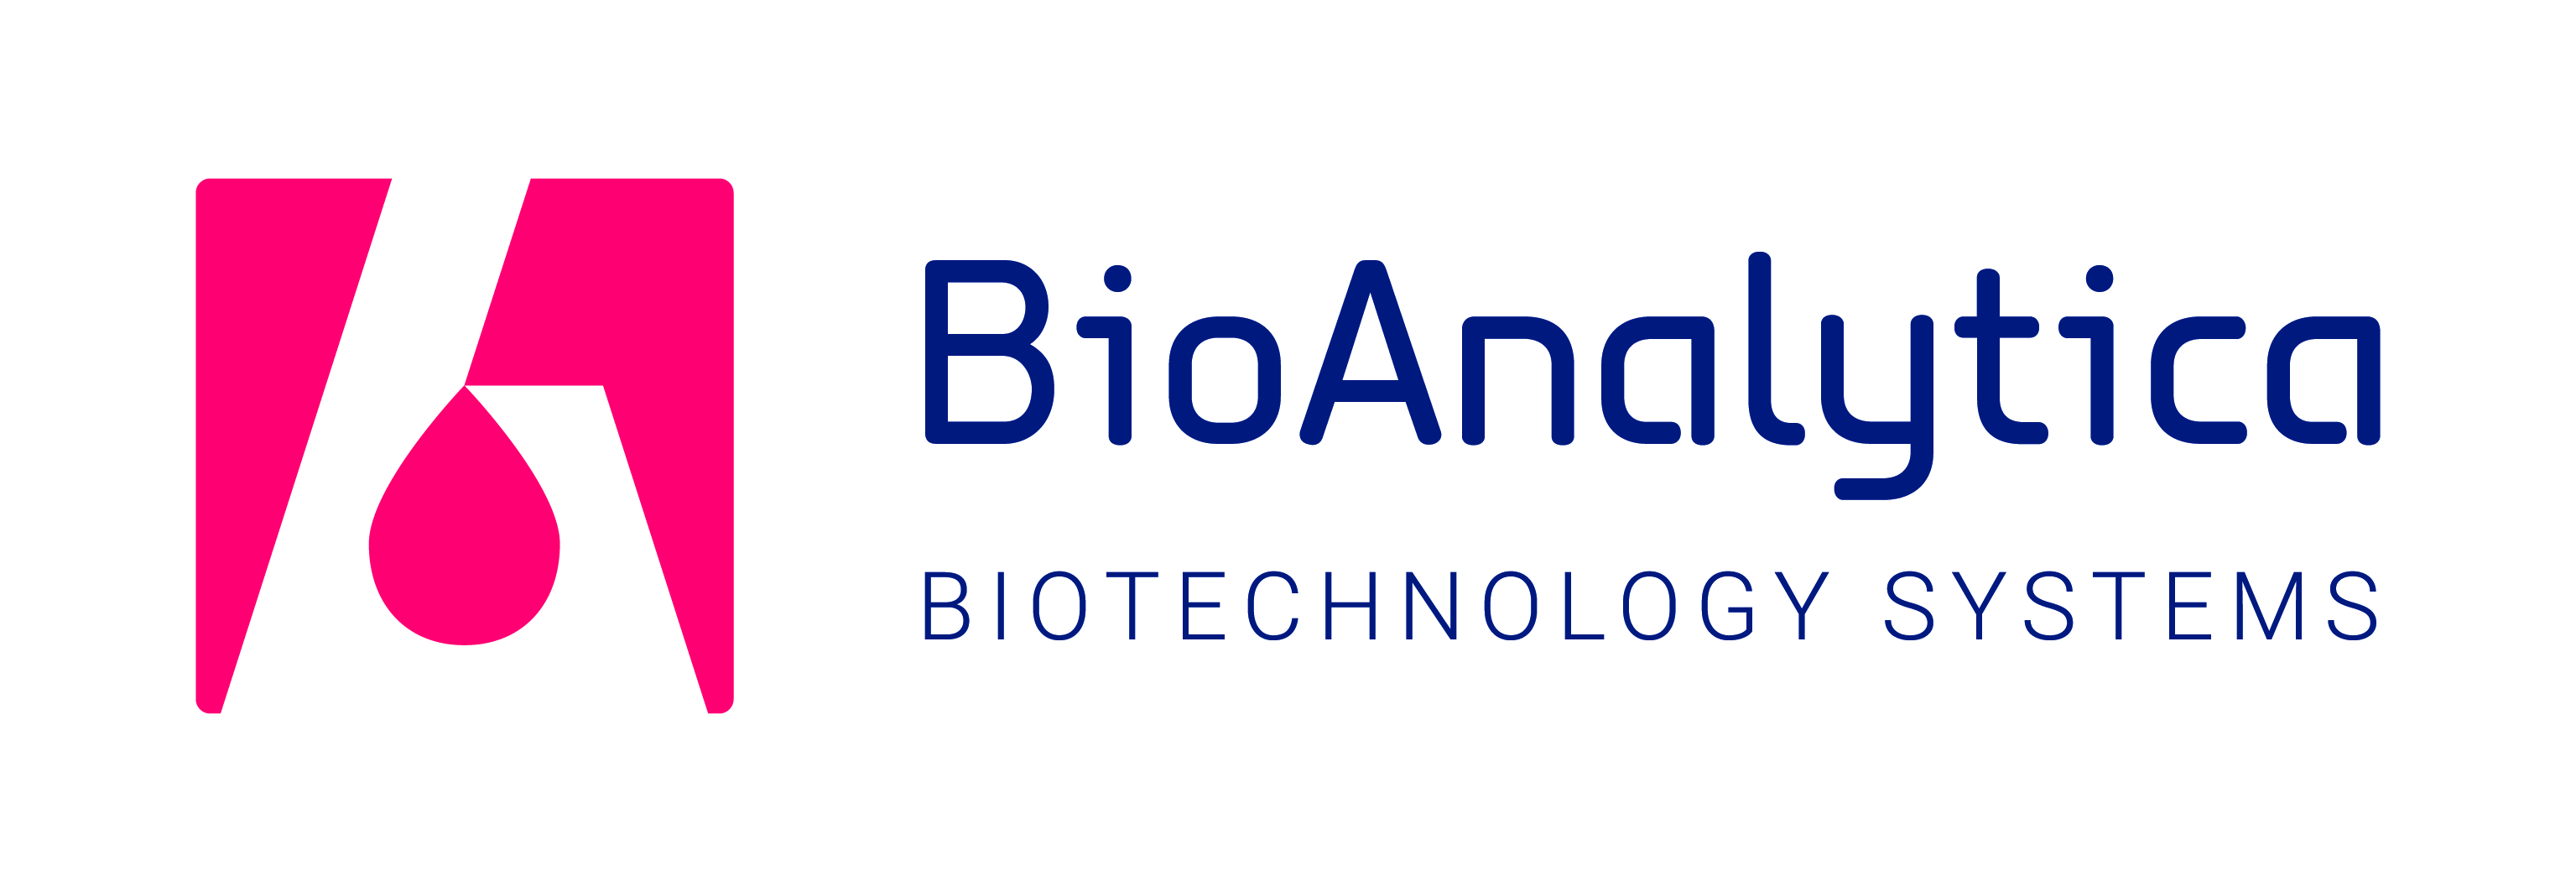 2023-05/1684153434_bioanalytica-logo.jpg